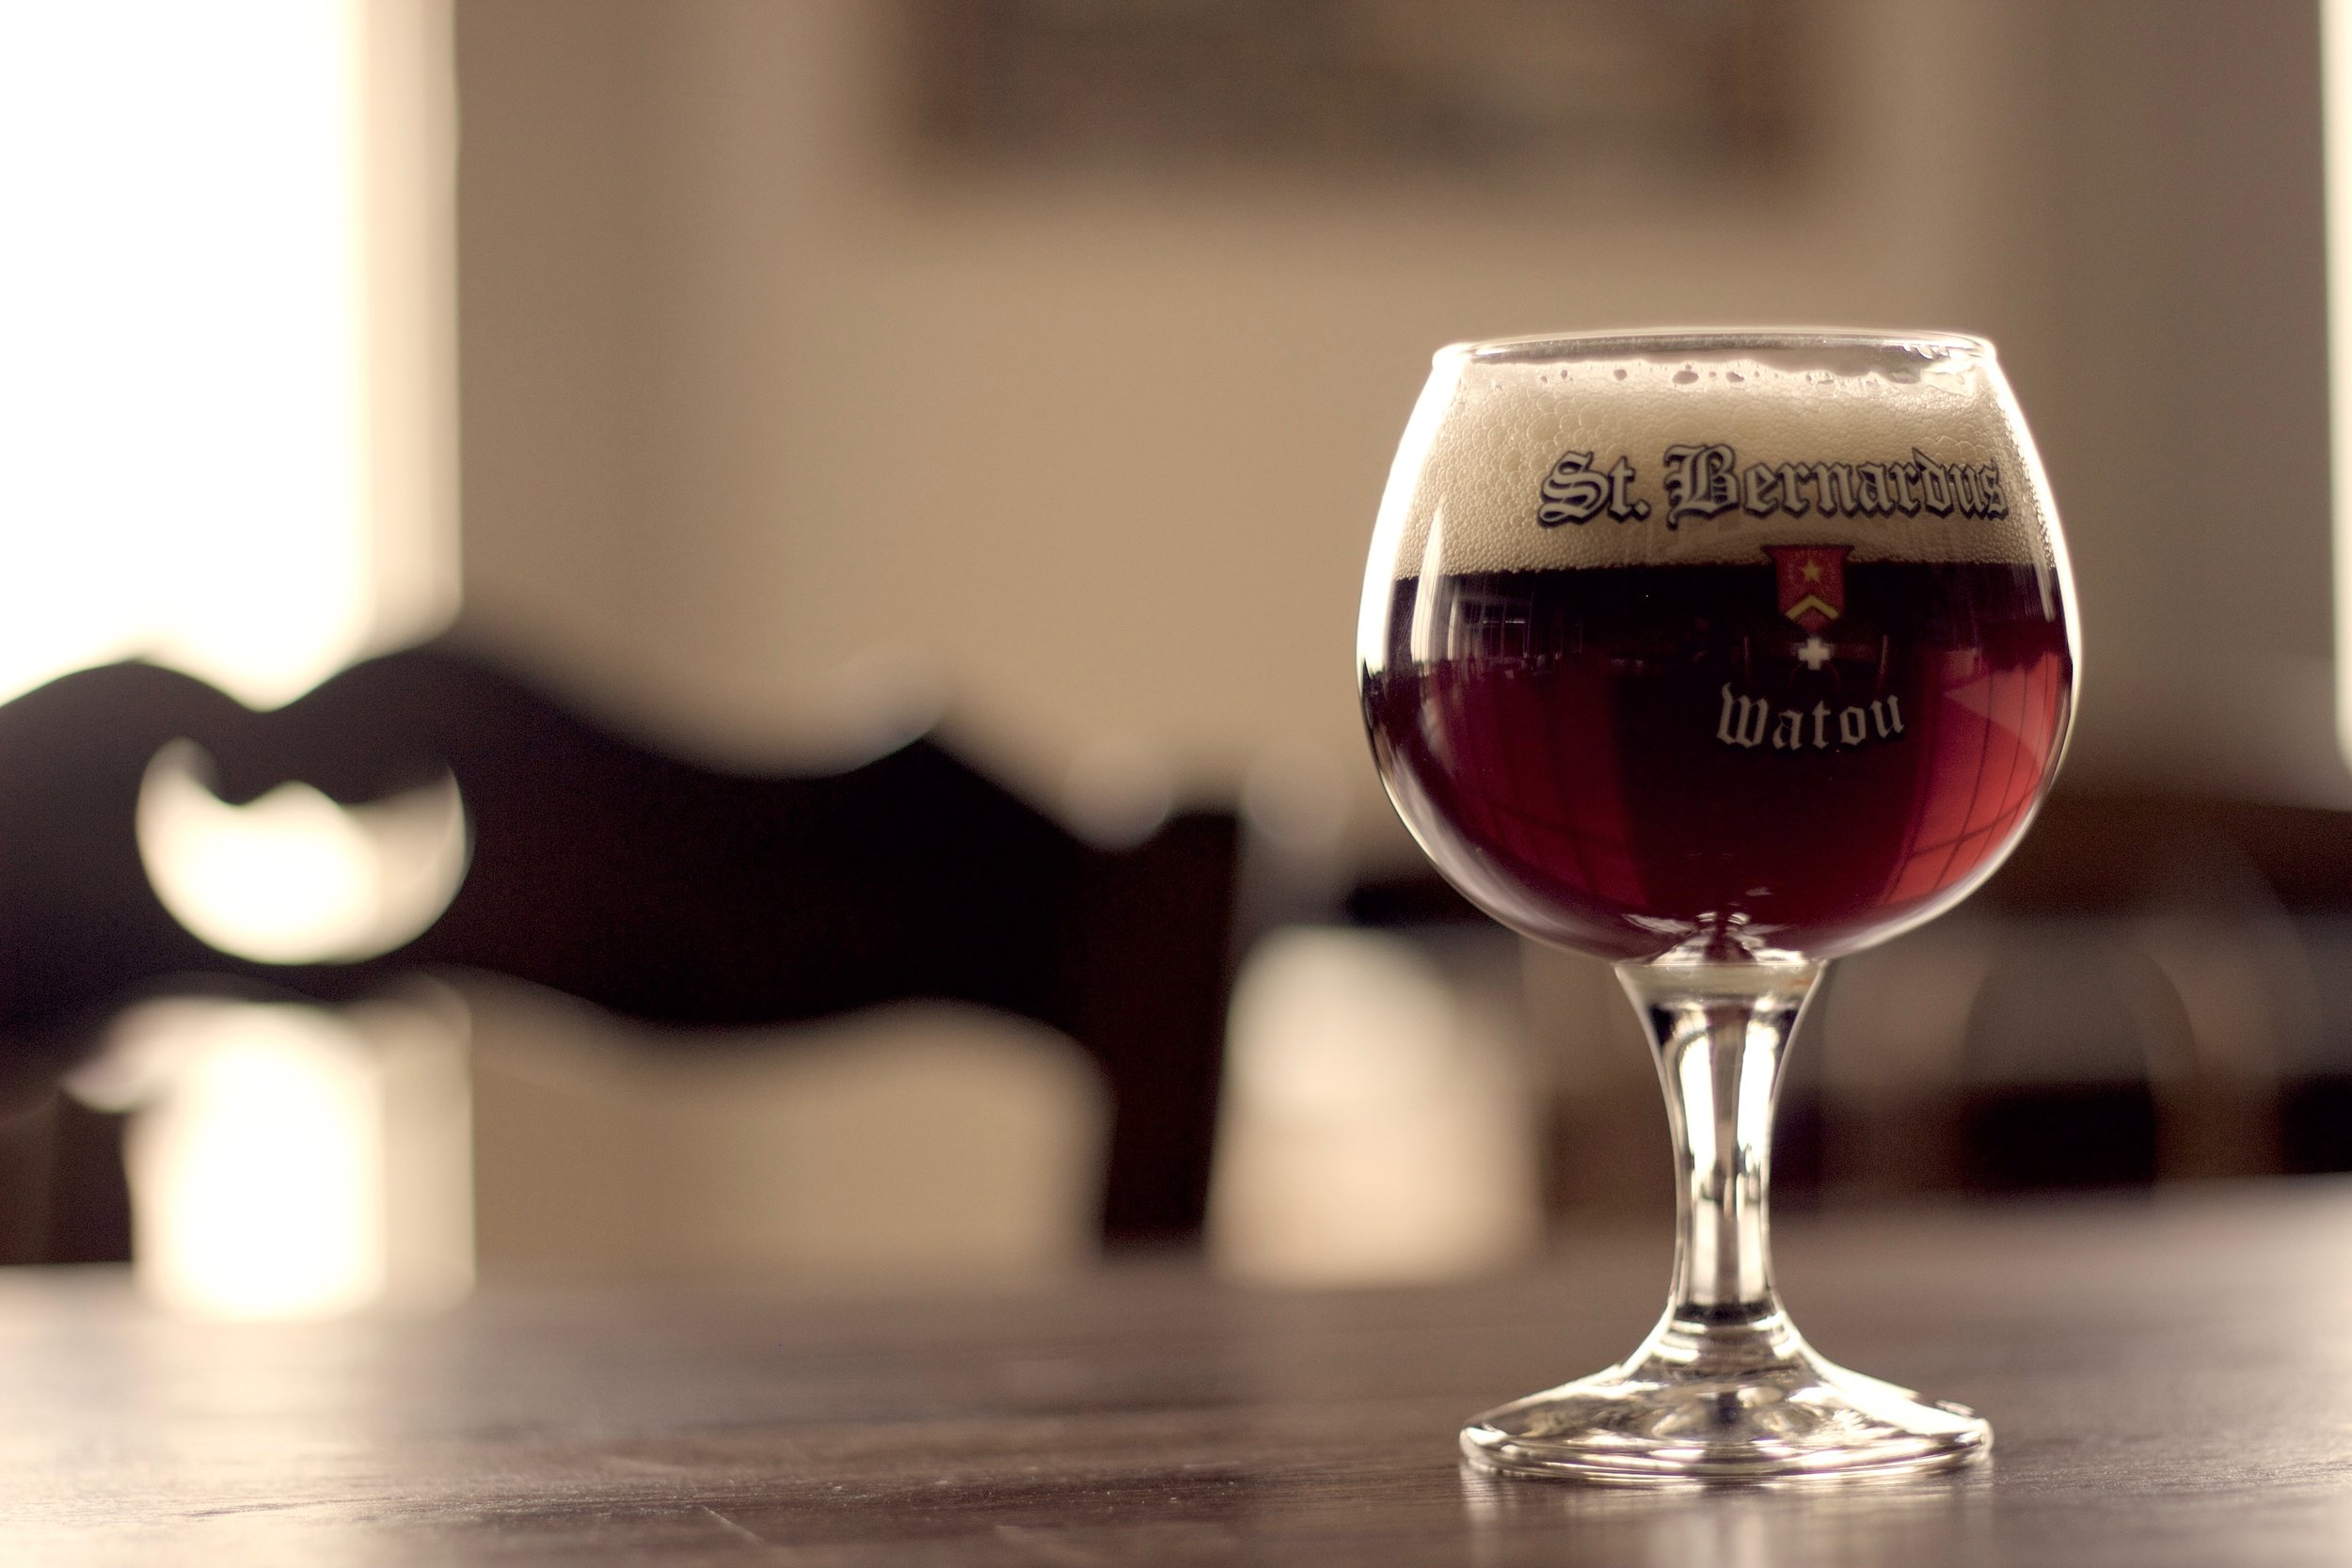 Brewed by St Details about   Stem BEER Glass Bernardus Brouwerij ~ Watou Belgium Brewery 